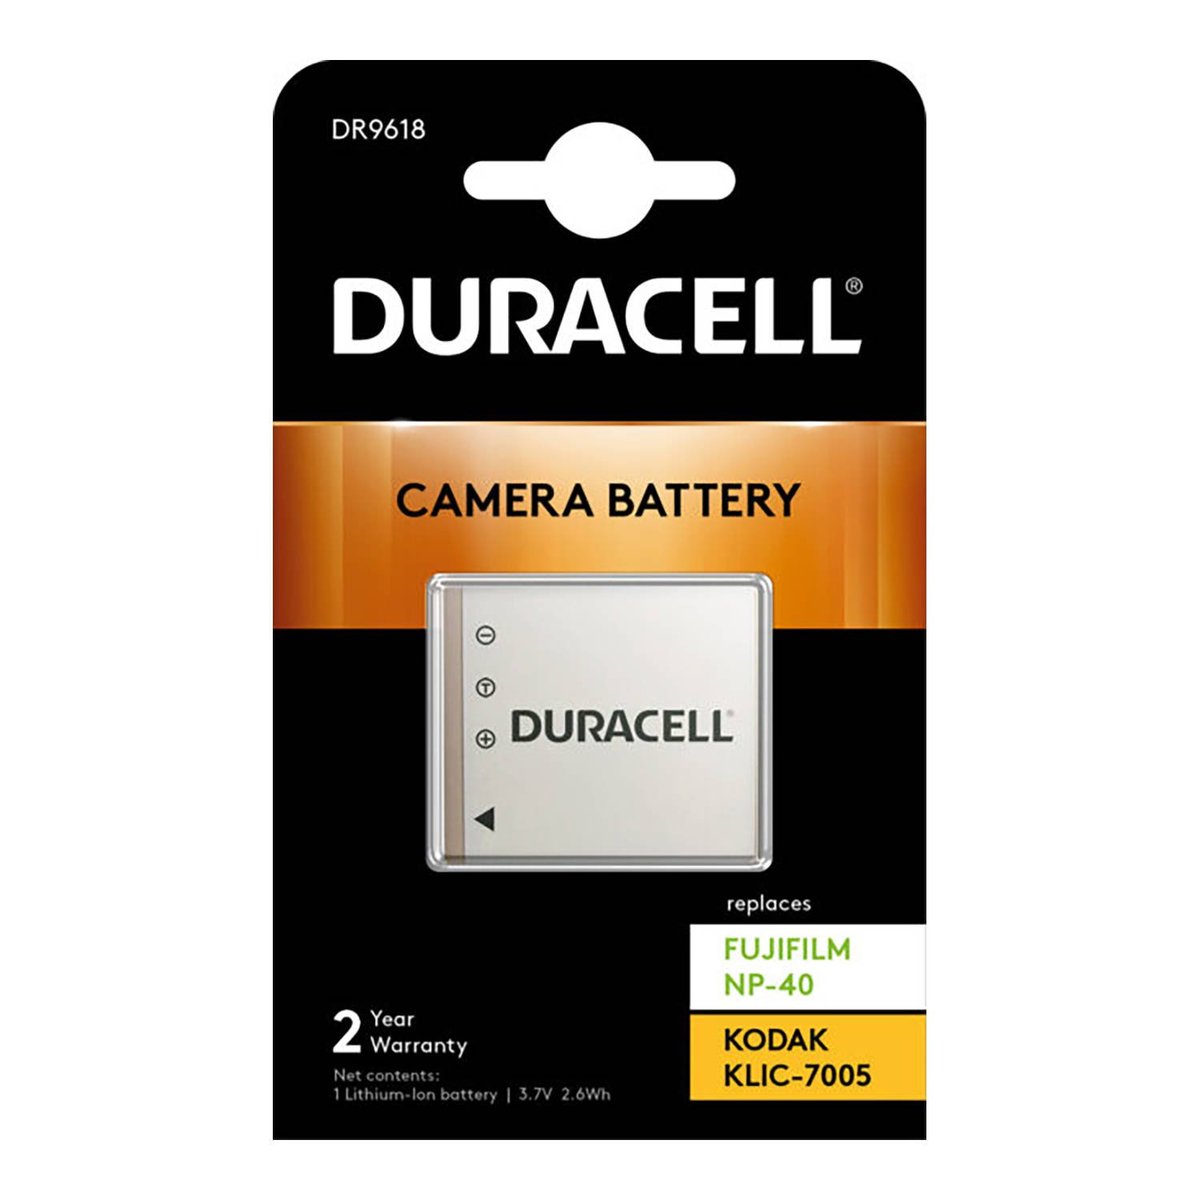 Фото - Акумулятор / батарейка Duracell Bateria  DR9618 3,7V 700mAh Li-Ion - Fuji NP-40 Kodak Klic-7005 Ko 